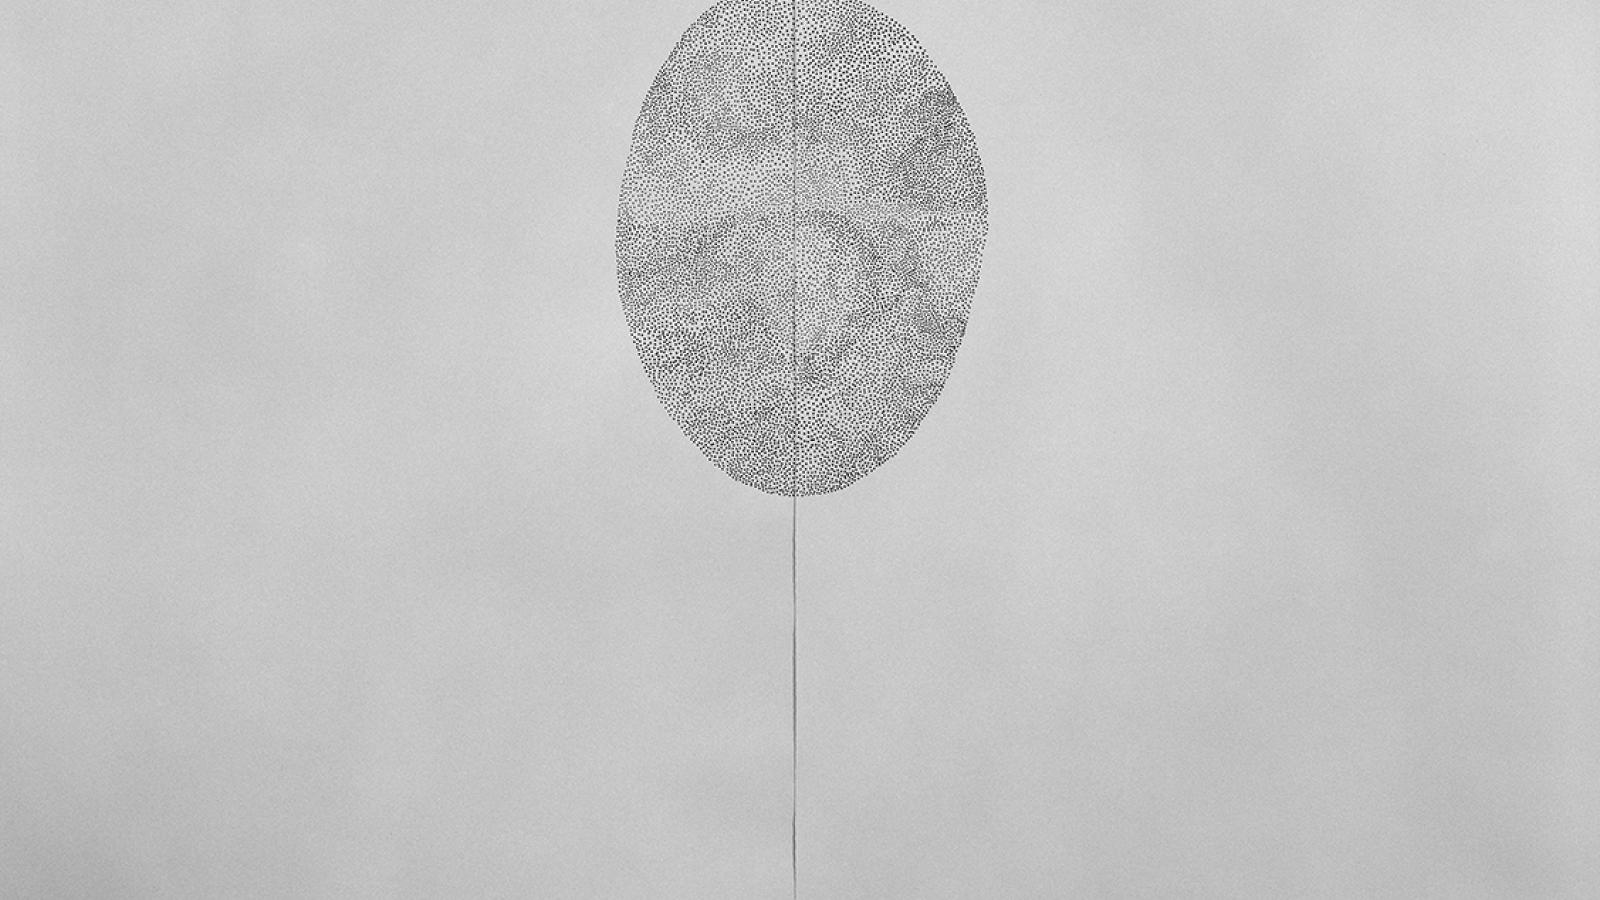 Resemblance, Image, Desire 14” x 11” silver gelatin print 2017